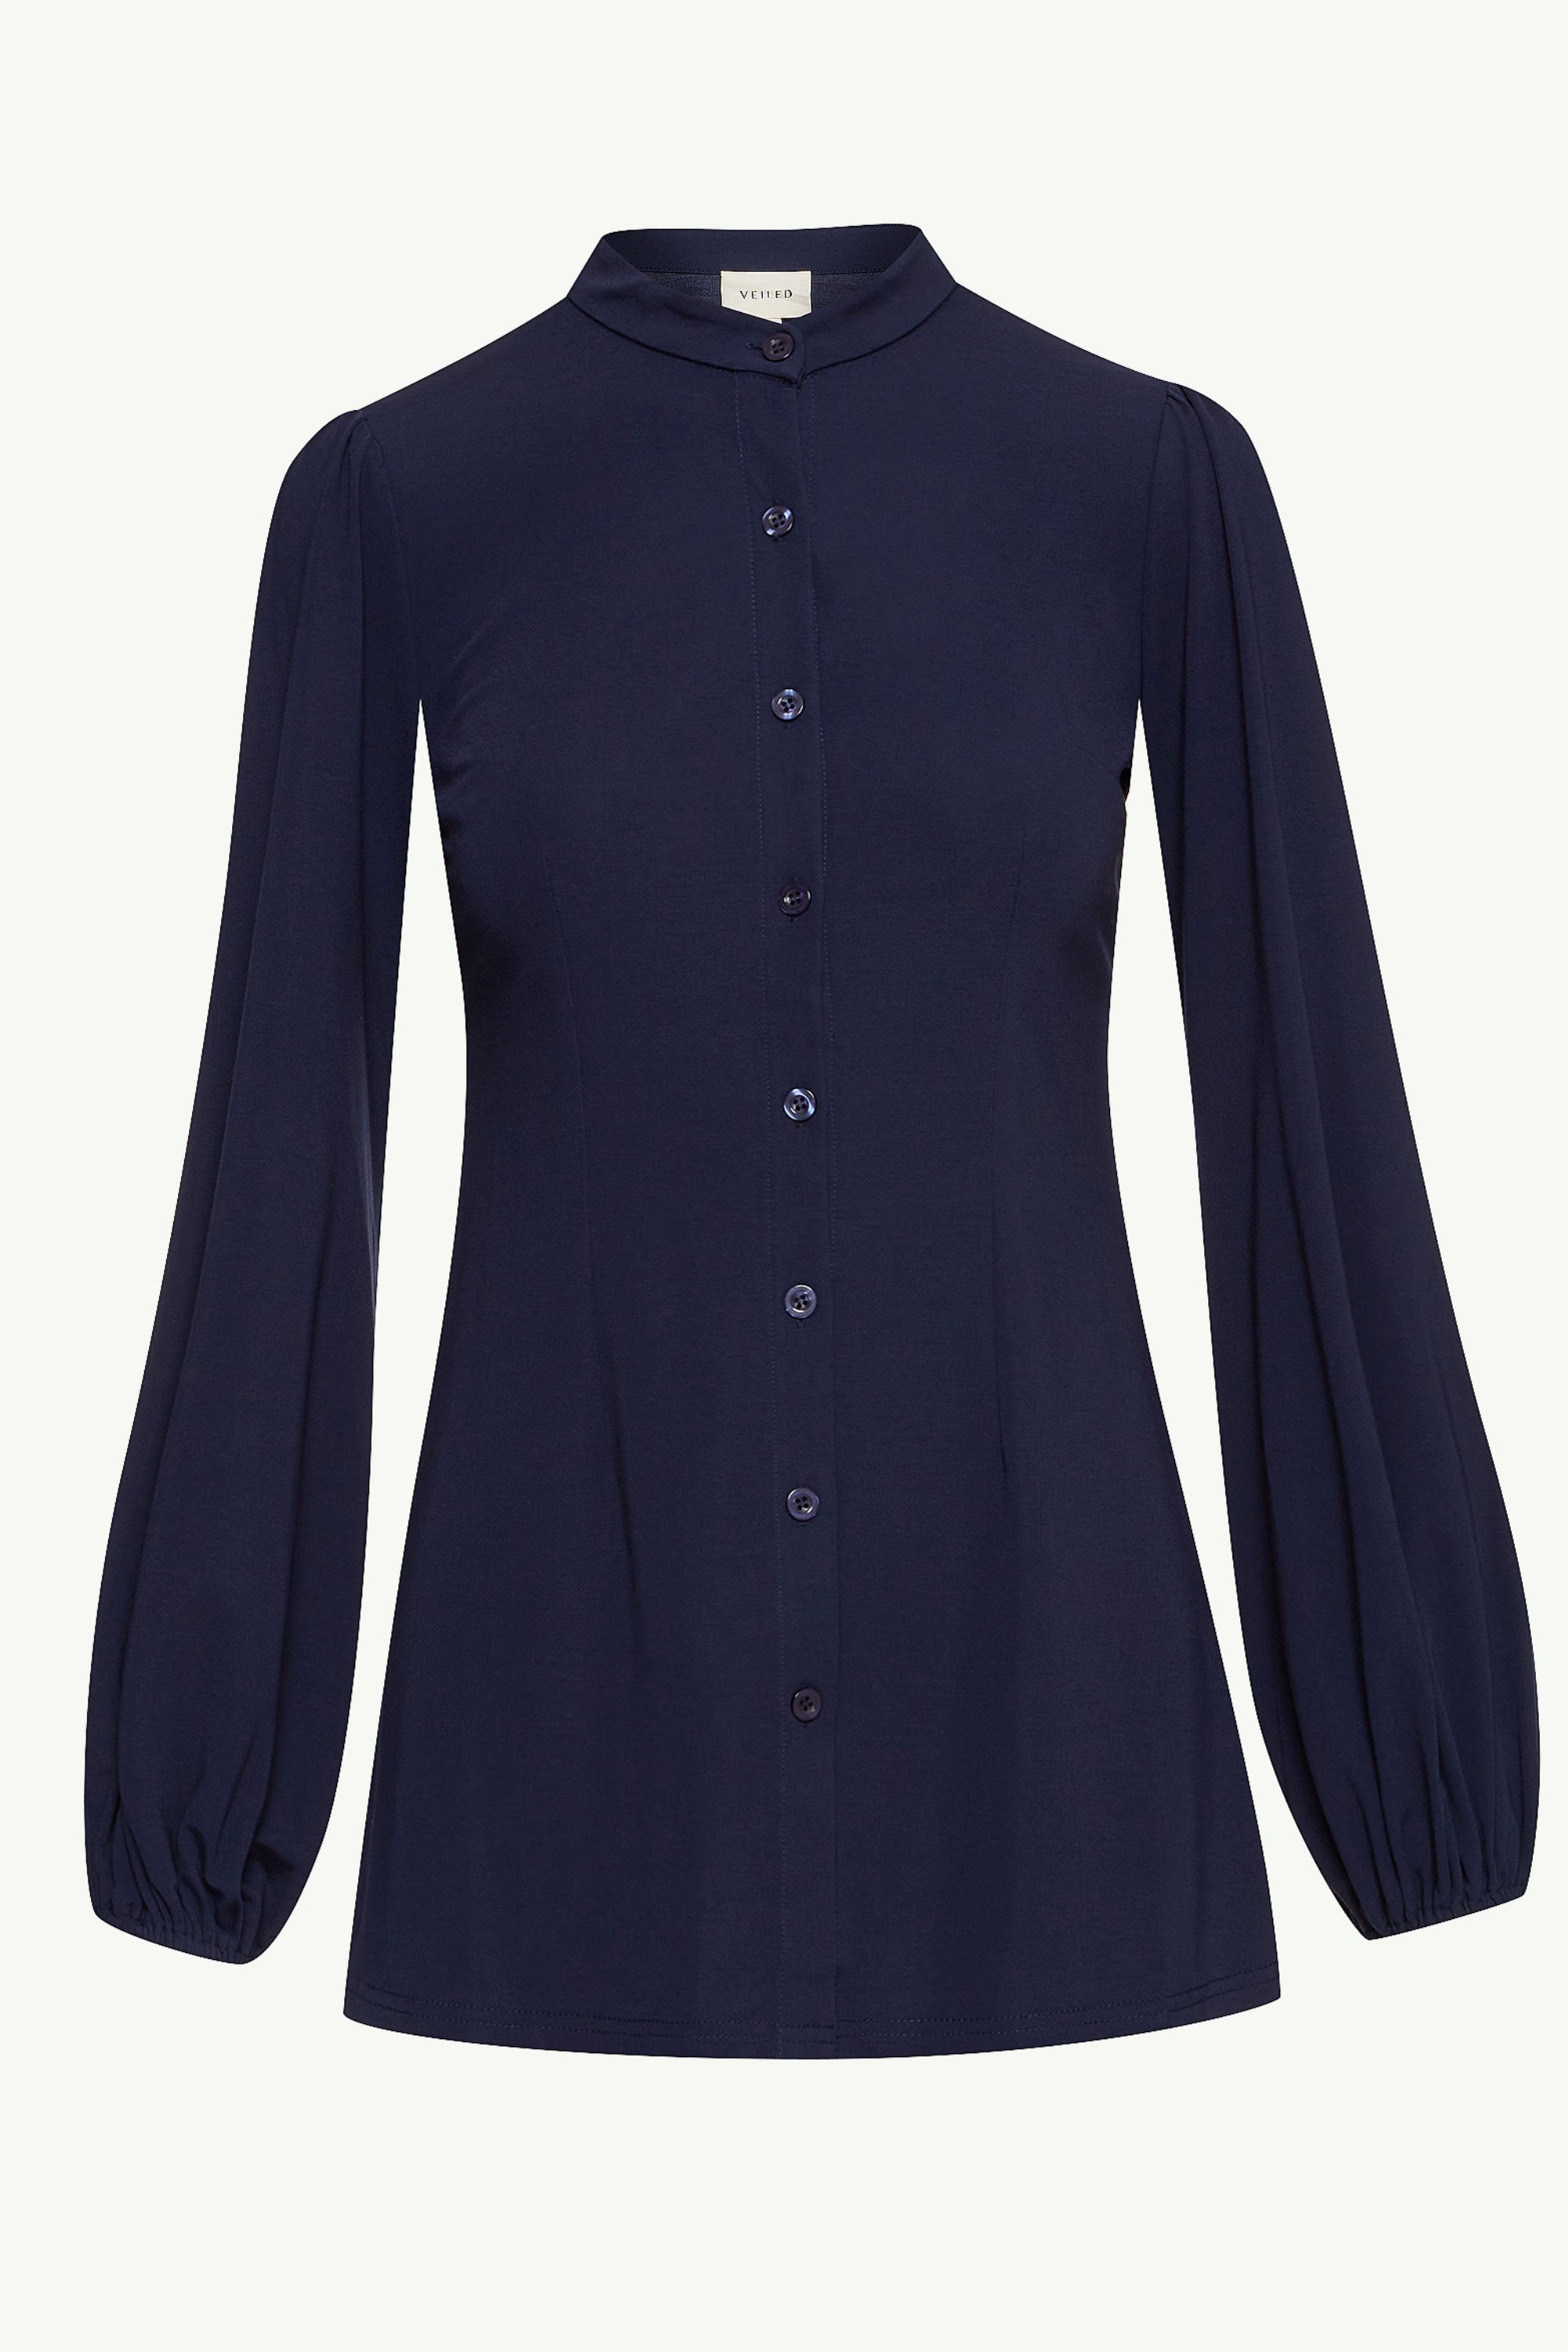 Rayana Jersey Button Down Top - Navy Blue Clothing saigonodysseyhotel 